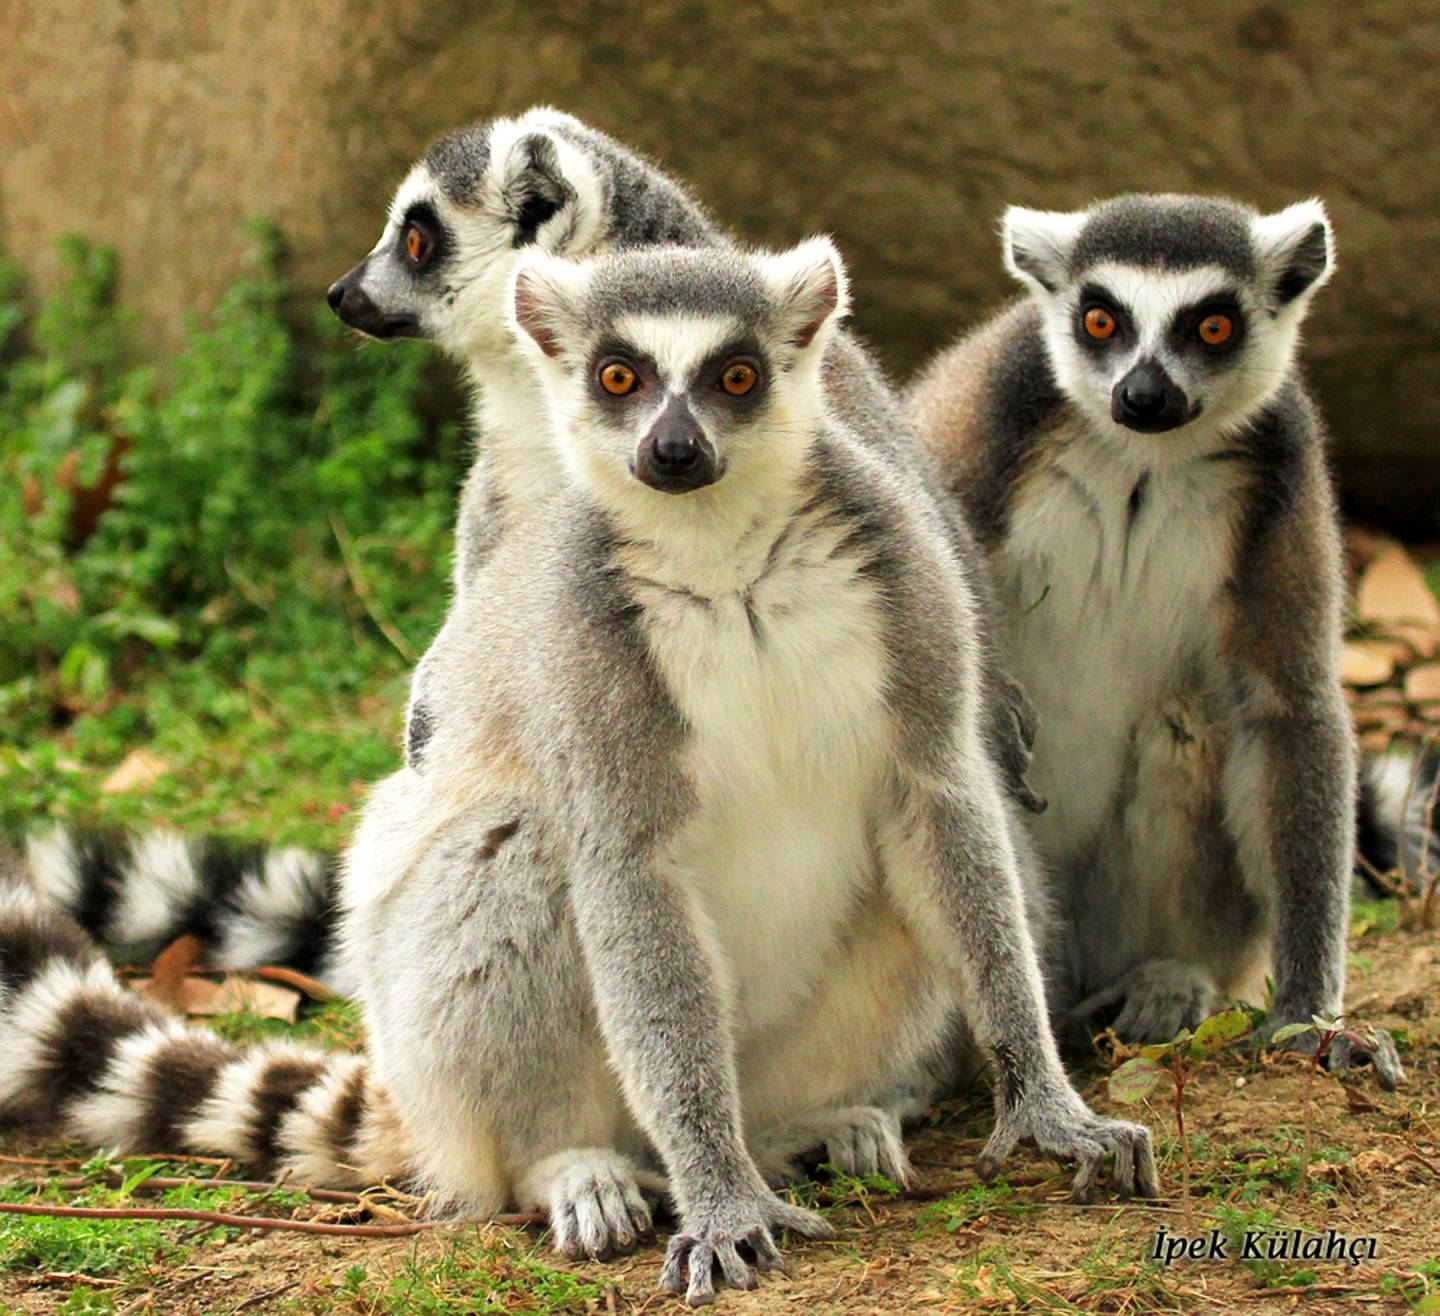 Three lemurs sitting together